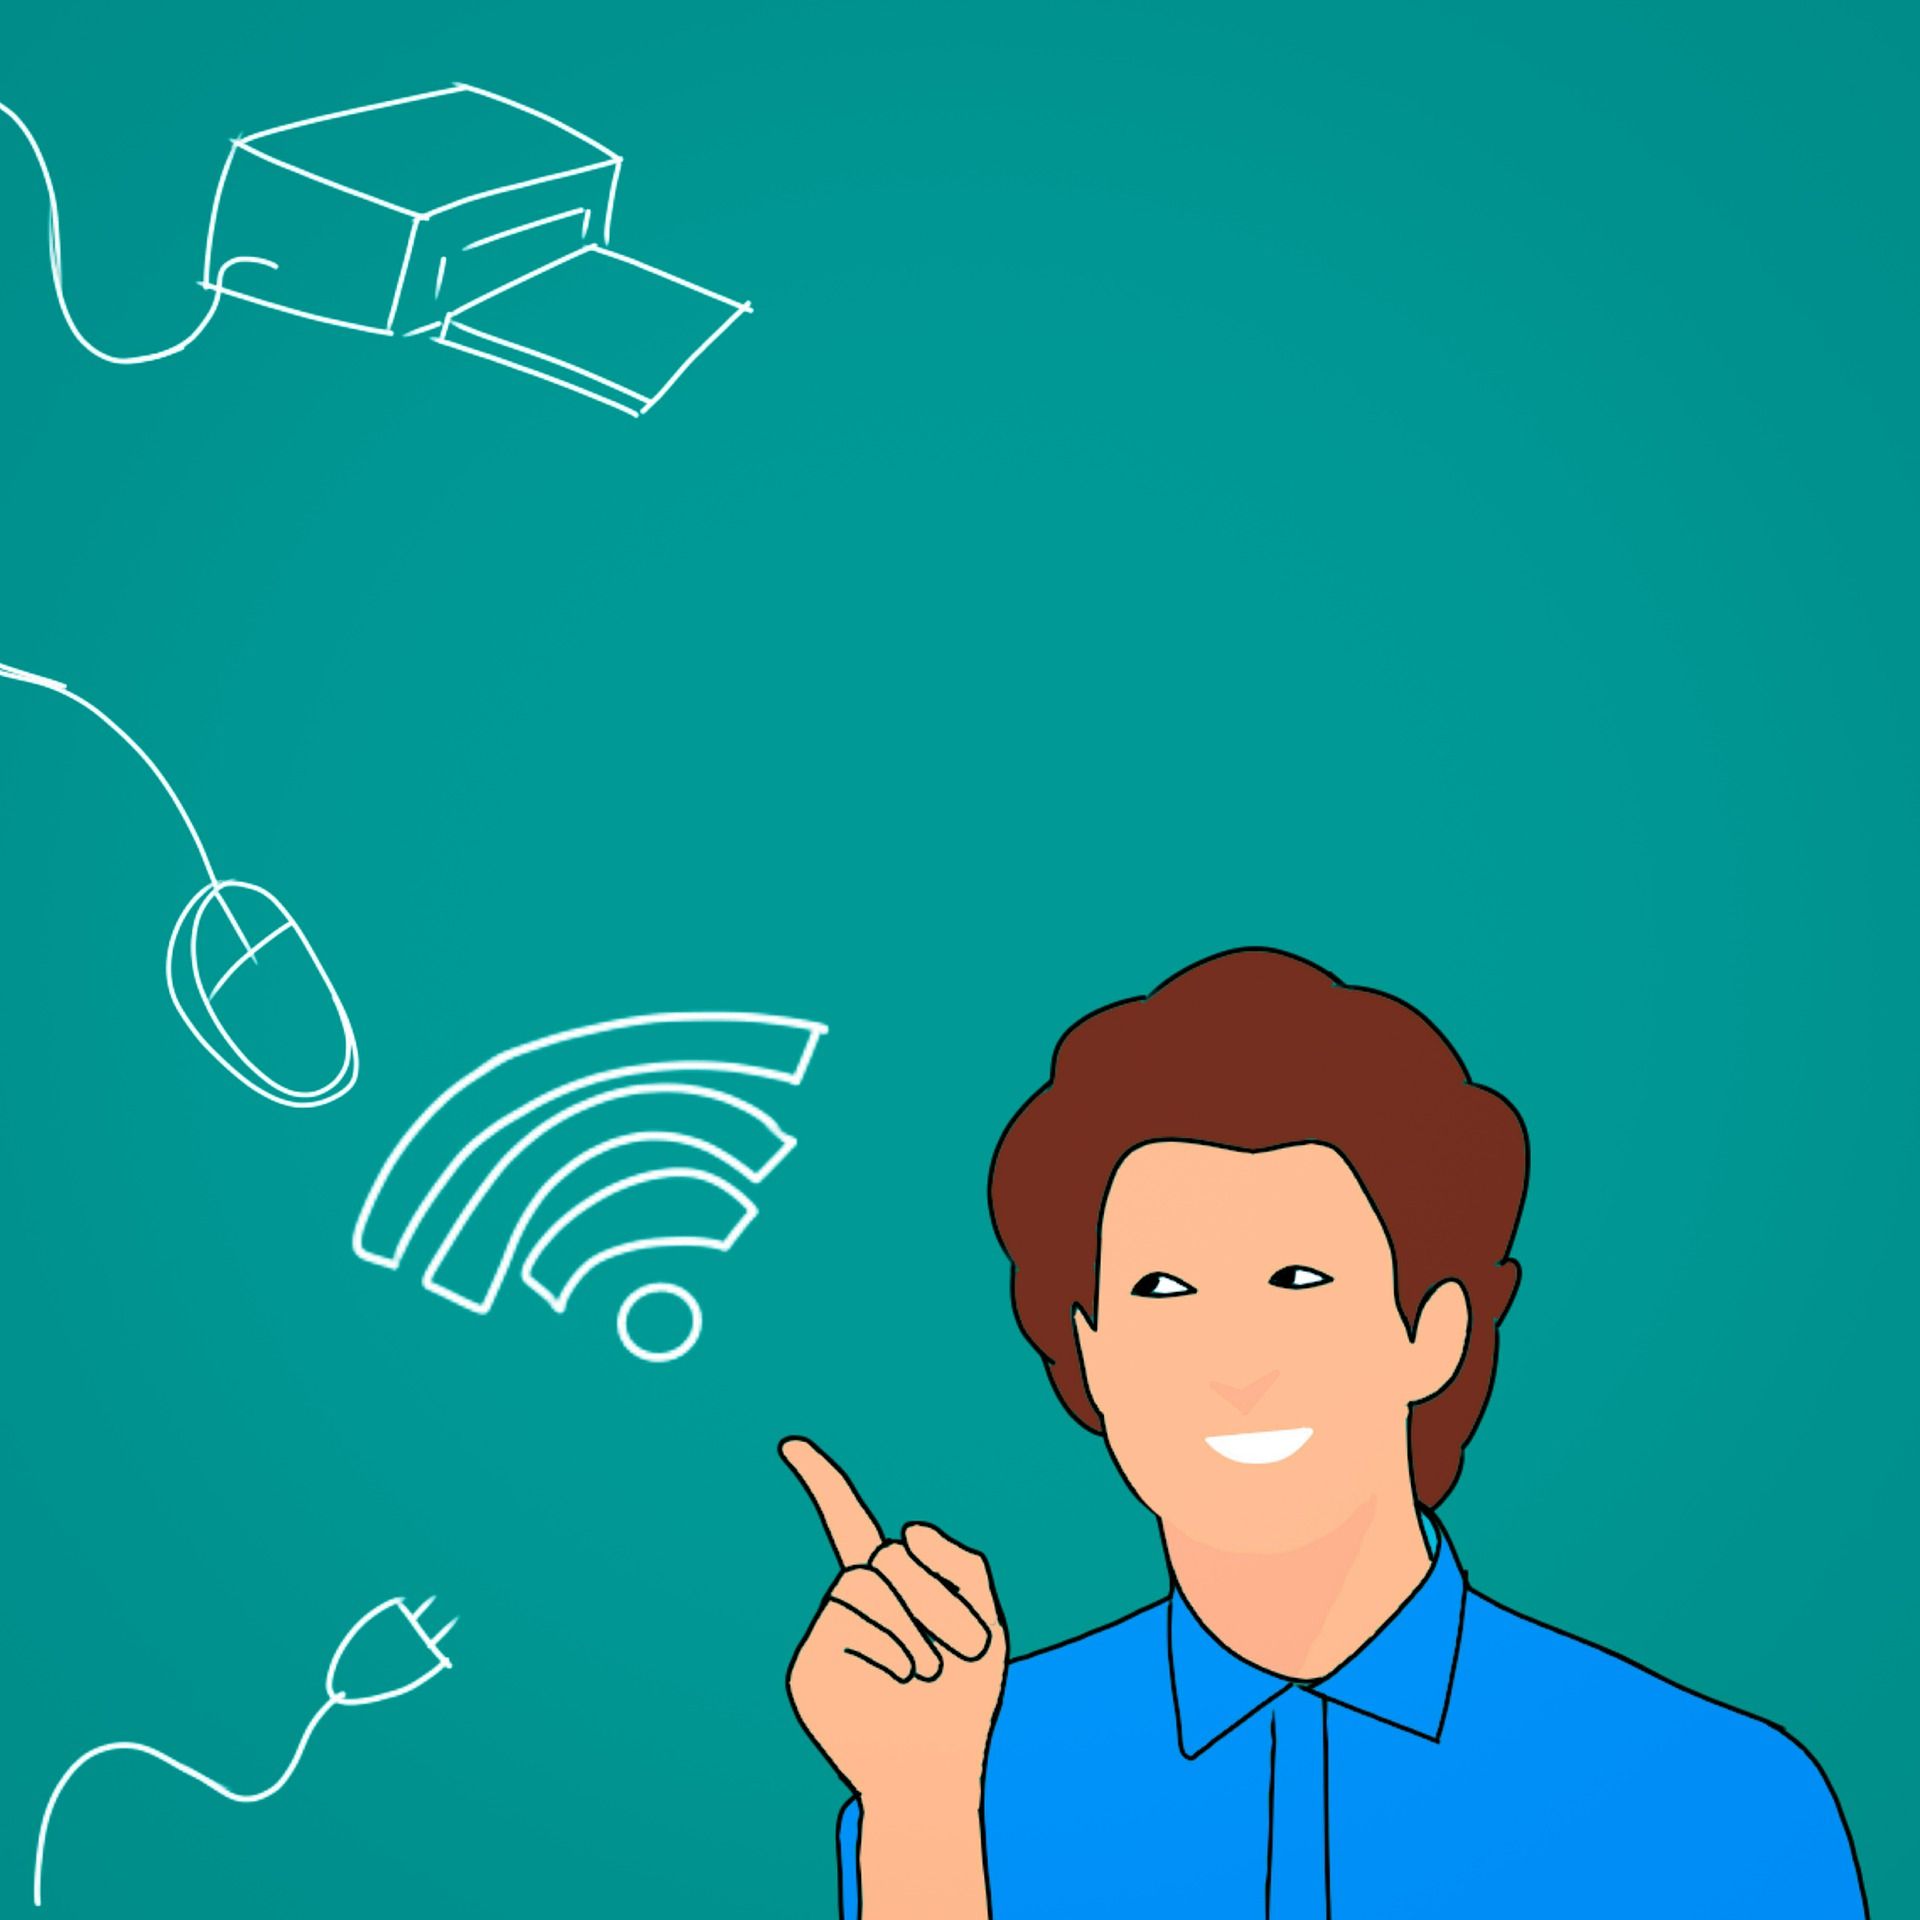 drawing of man pointing at WiFi symbol